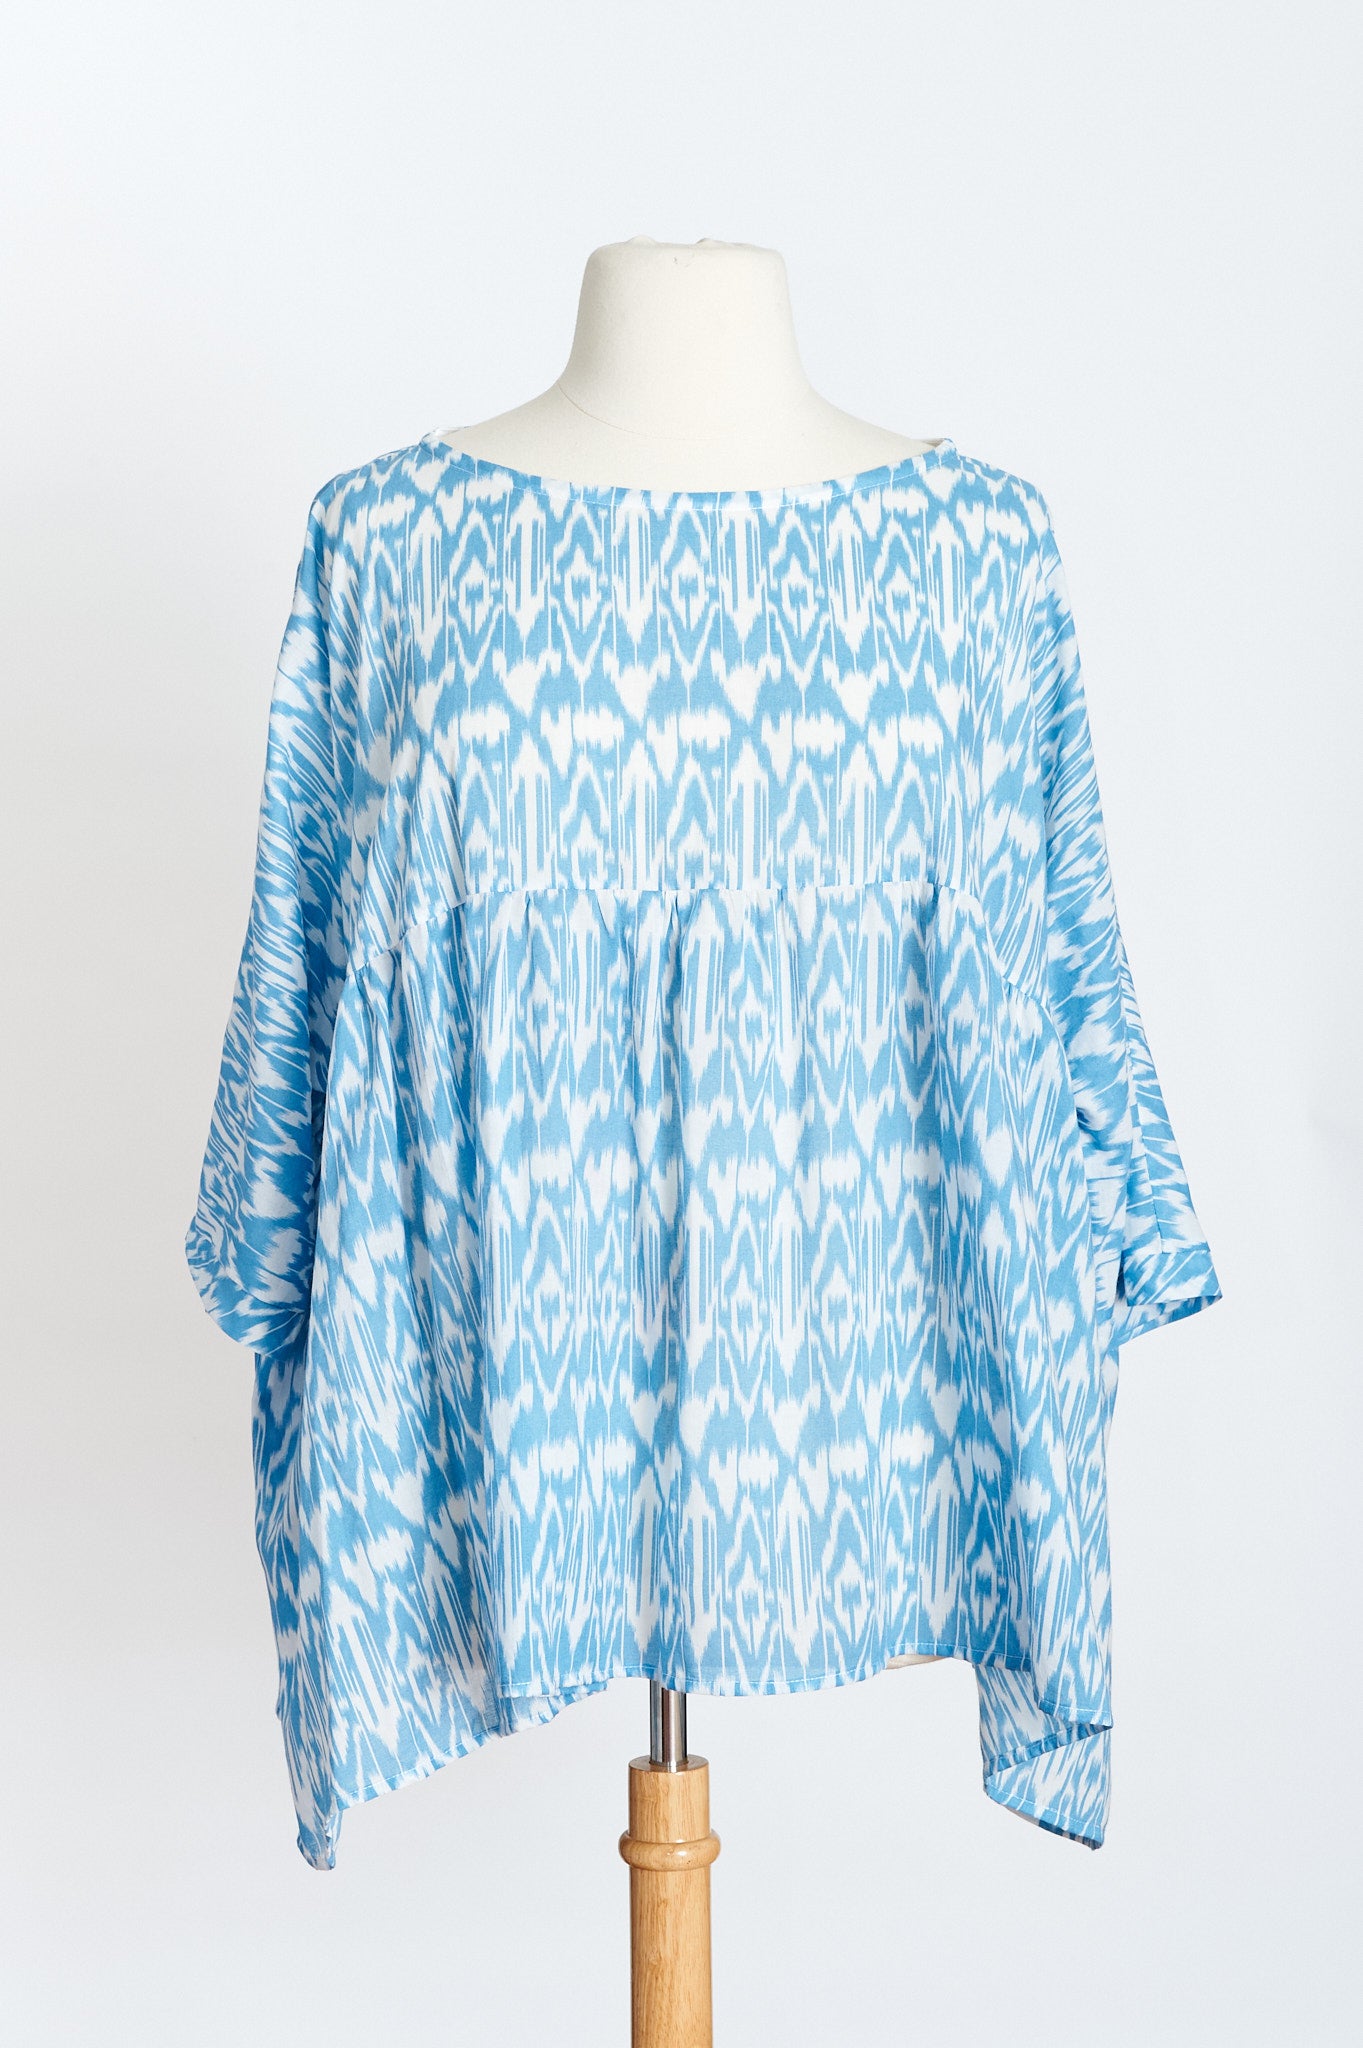 Nicola Short : Blue & White Indian Cotton